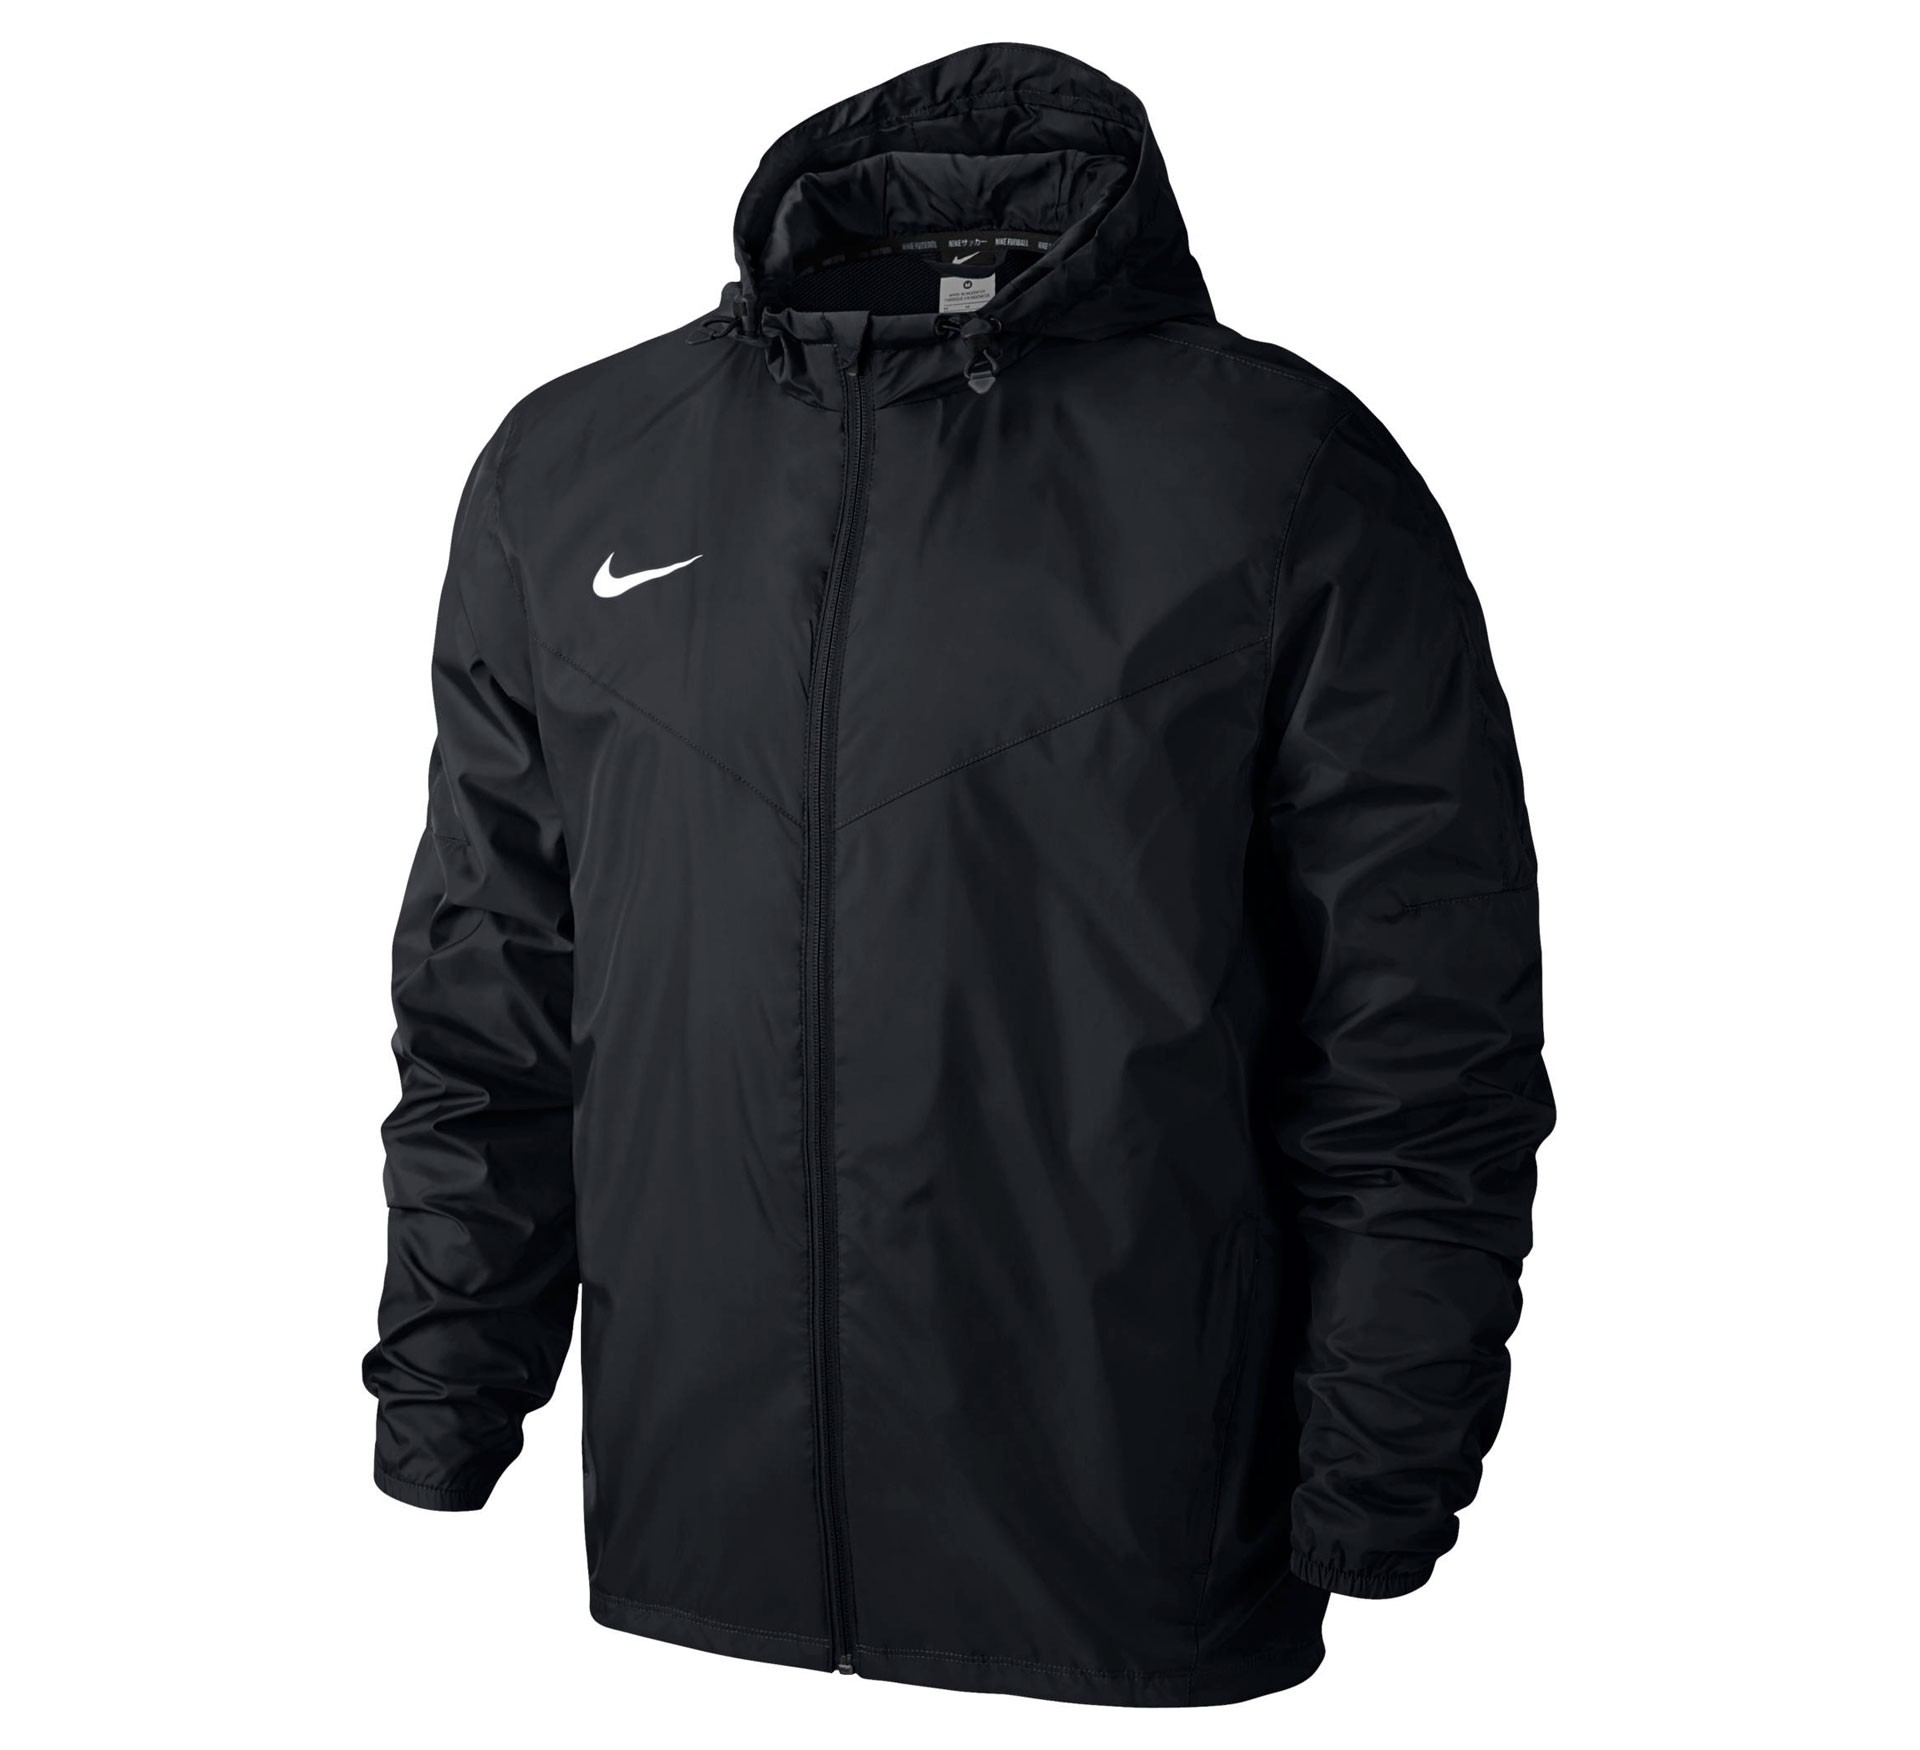 Plutosport - Nike Sideline Rain Jacket